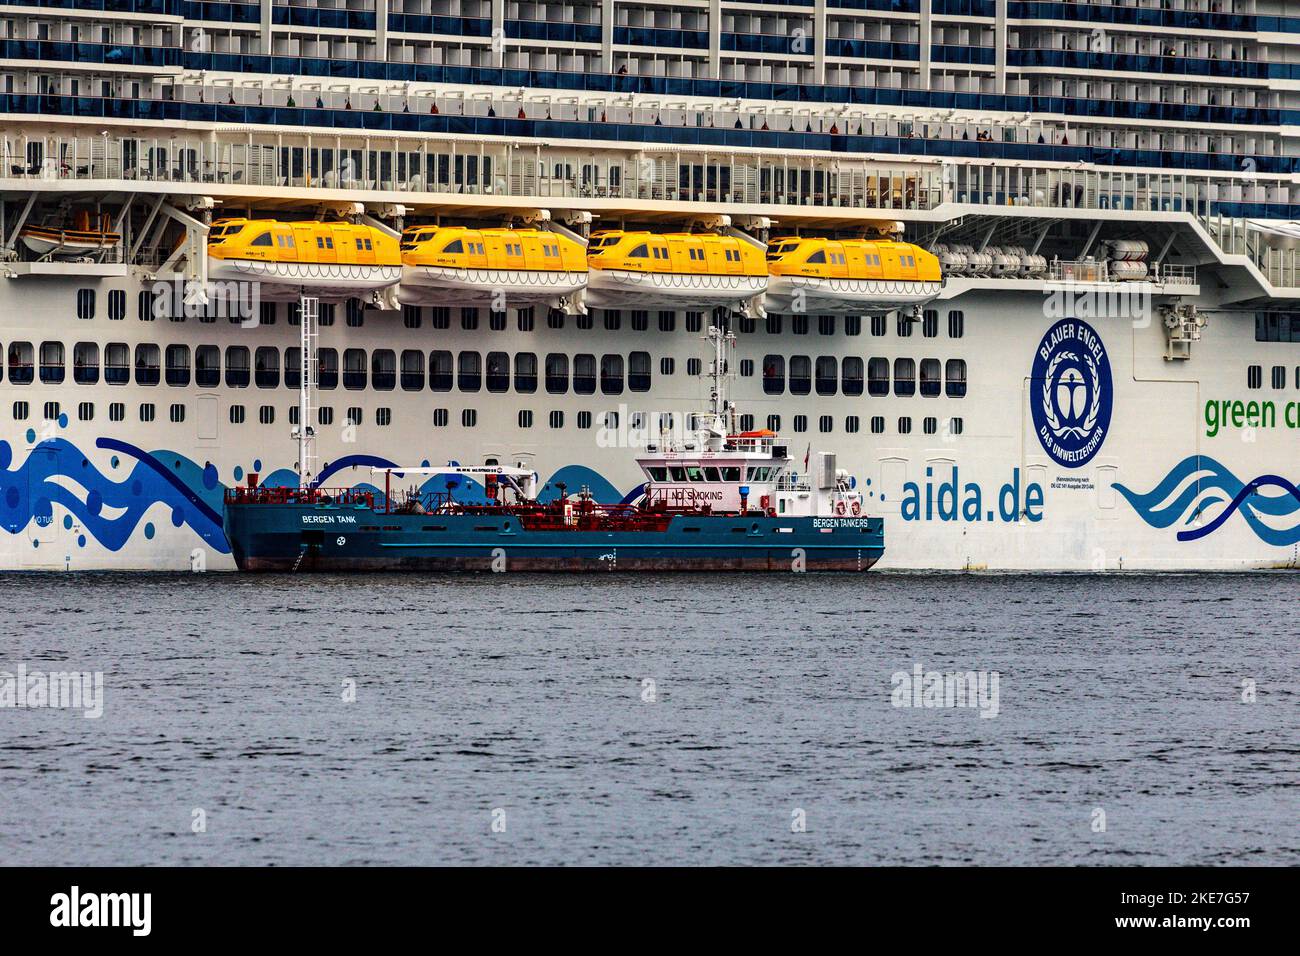 Cruise ship Sky AIDAnova at Jekteviken terminal in port of Bergen, Norway, getting ready for departure. Bunkering tanker Bergen Tank alongside Stock Photo